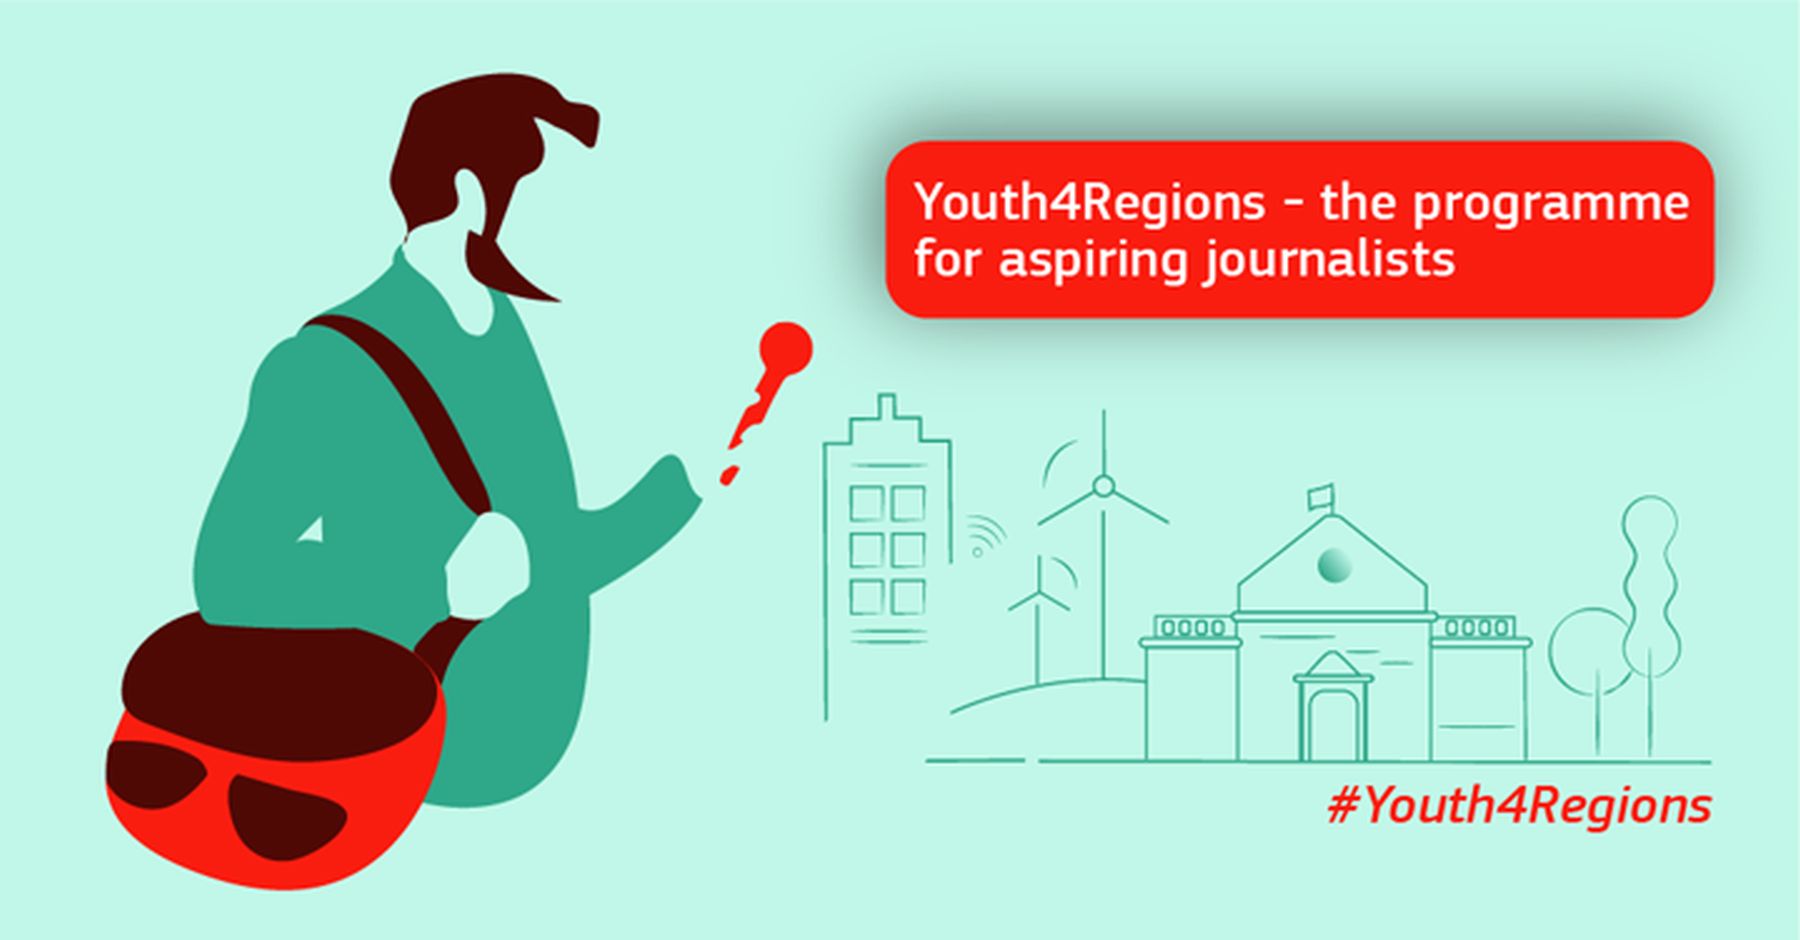 Javni poziv za studente novinarstva i mlade novinare | Youth4Regions